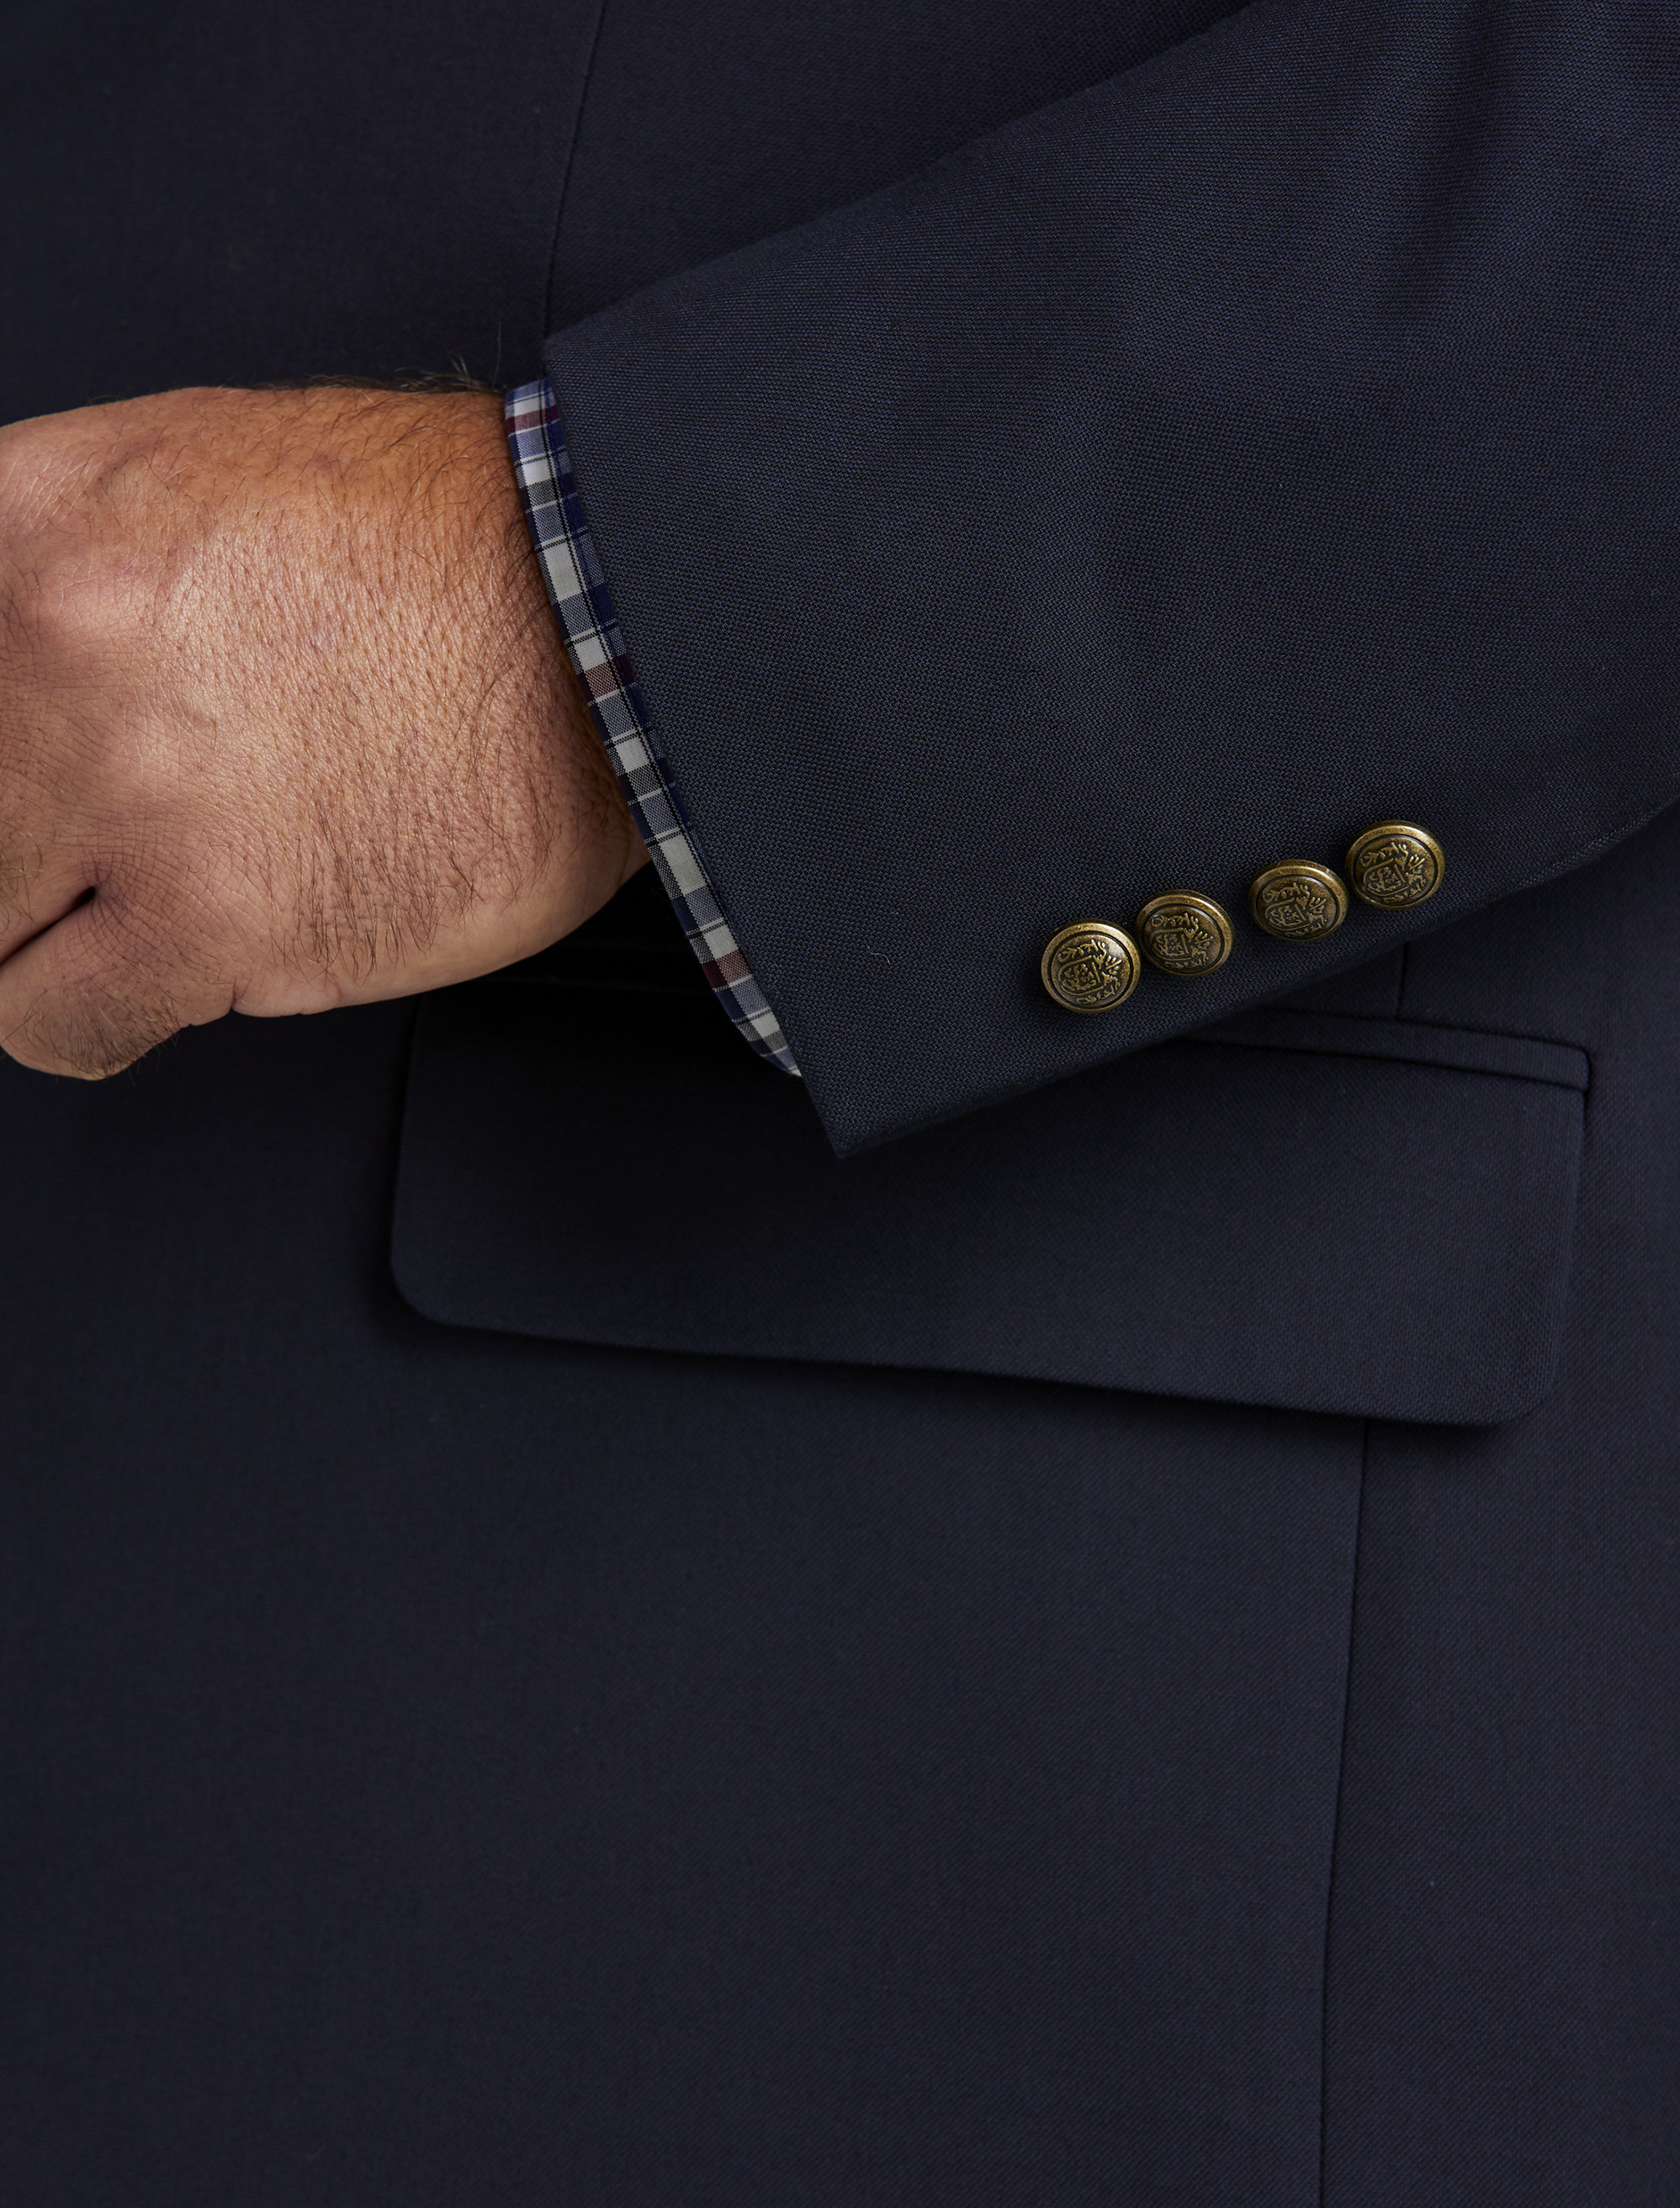 Jacket-Relaxer Suit Jacket - Executive Cut